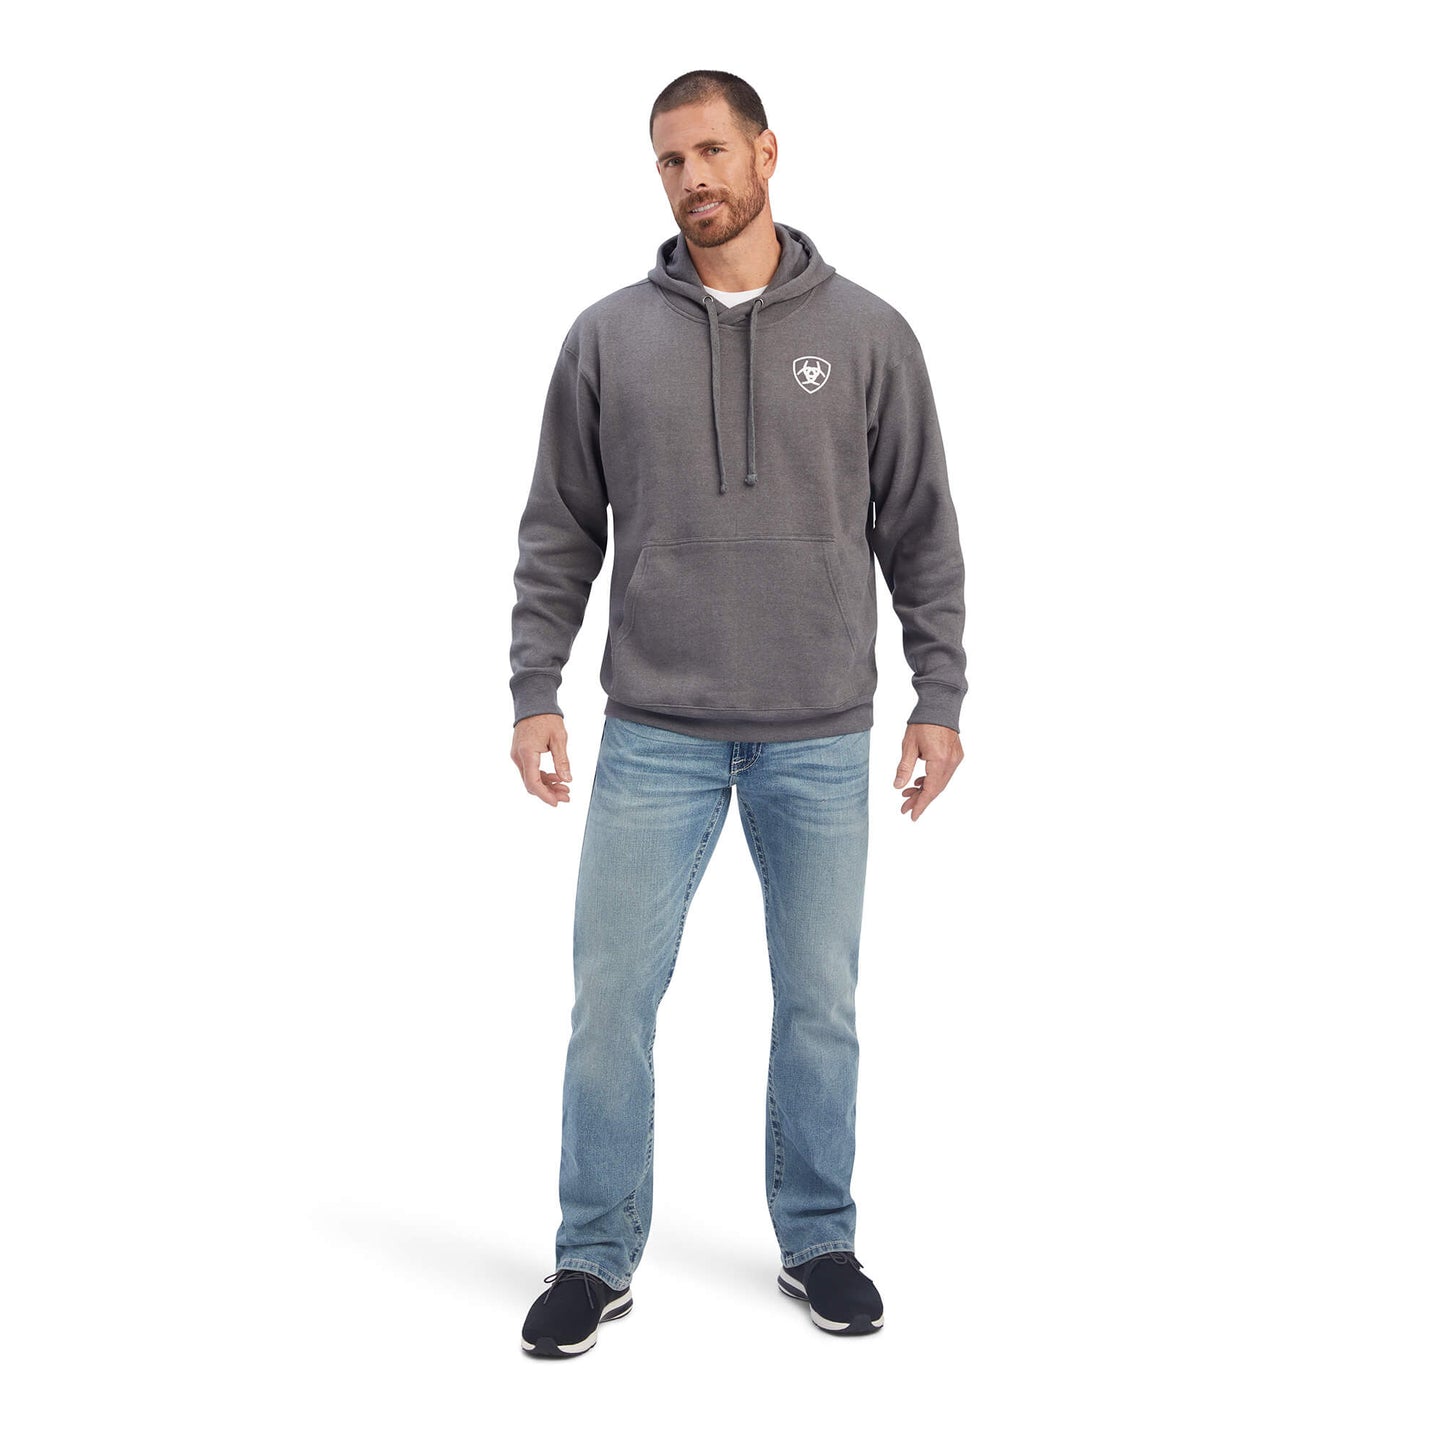 Ariat Mens Southwest Shield Sweatshirt Charcoal